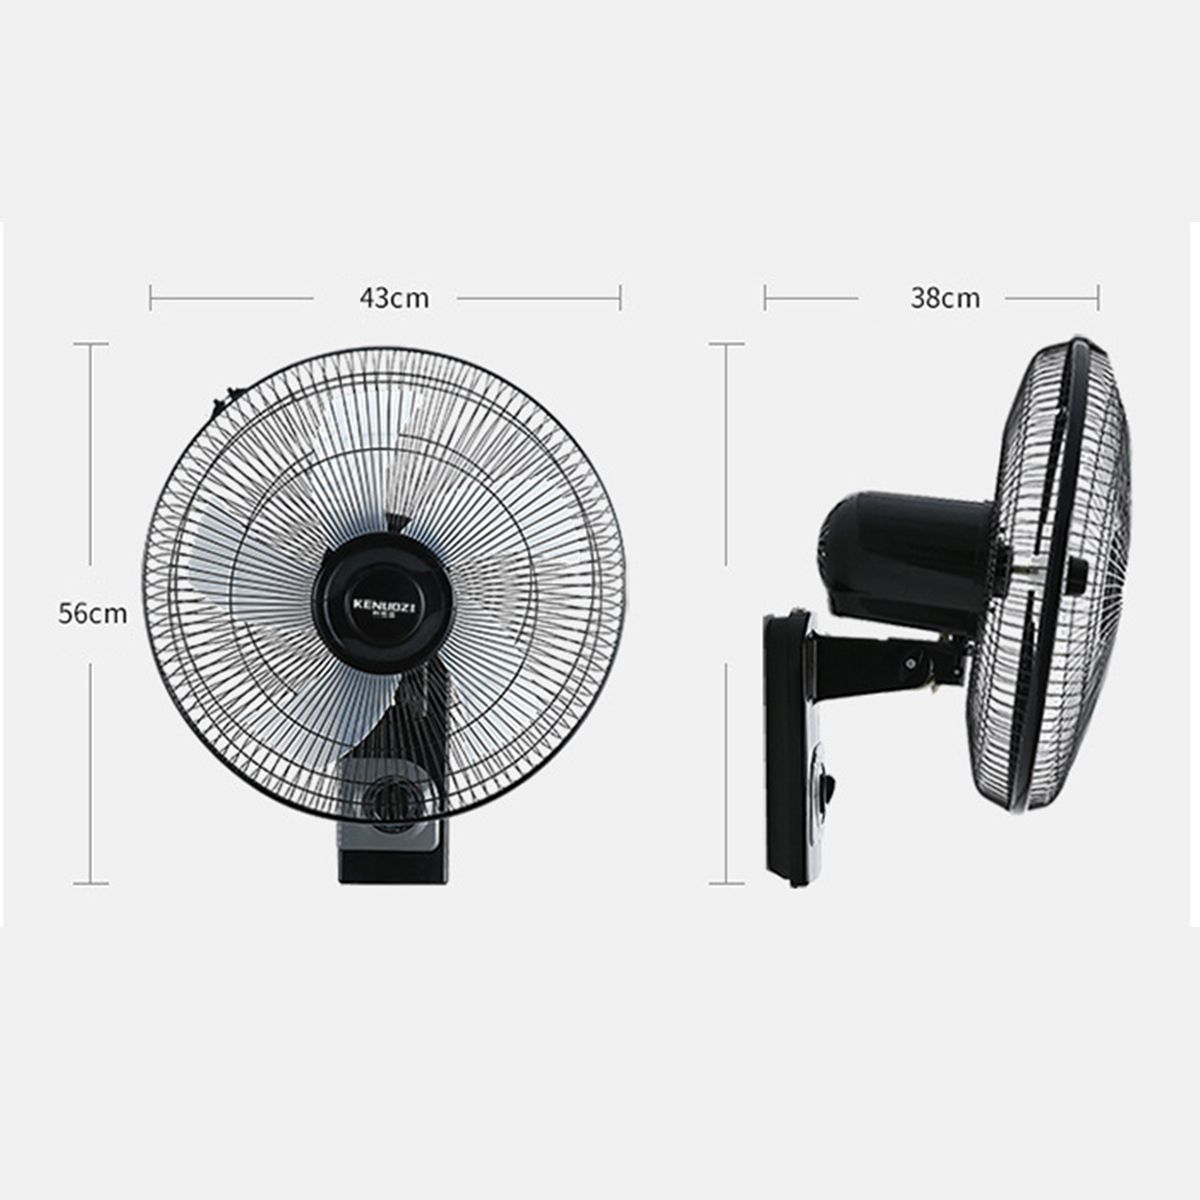 220V-55W-Wall-Mounted-Fan-Home-Cooling-Fan-3-Levels-Adjustable-5-Blades-16-1744465